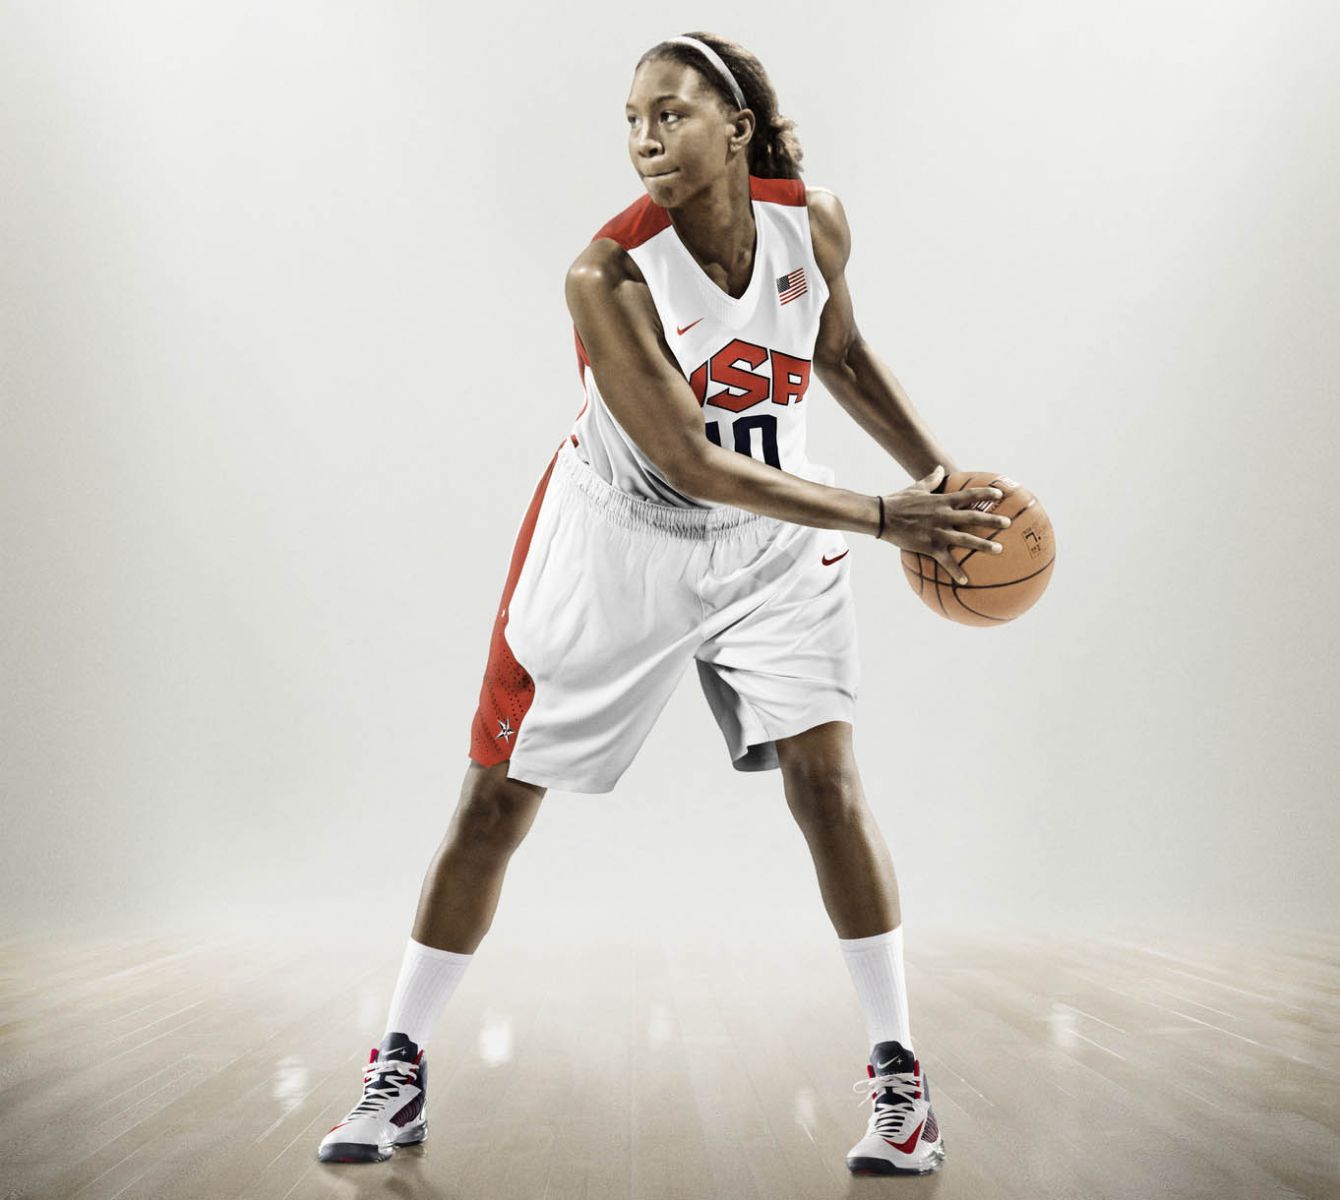 Nike USA Basketball Hyper Elite Uniforms 2012 - Tamika Catchings (1)